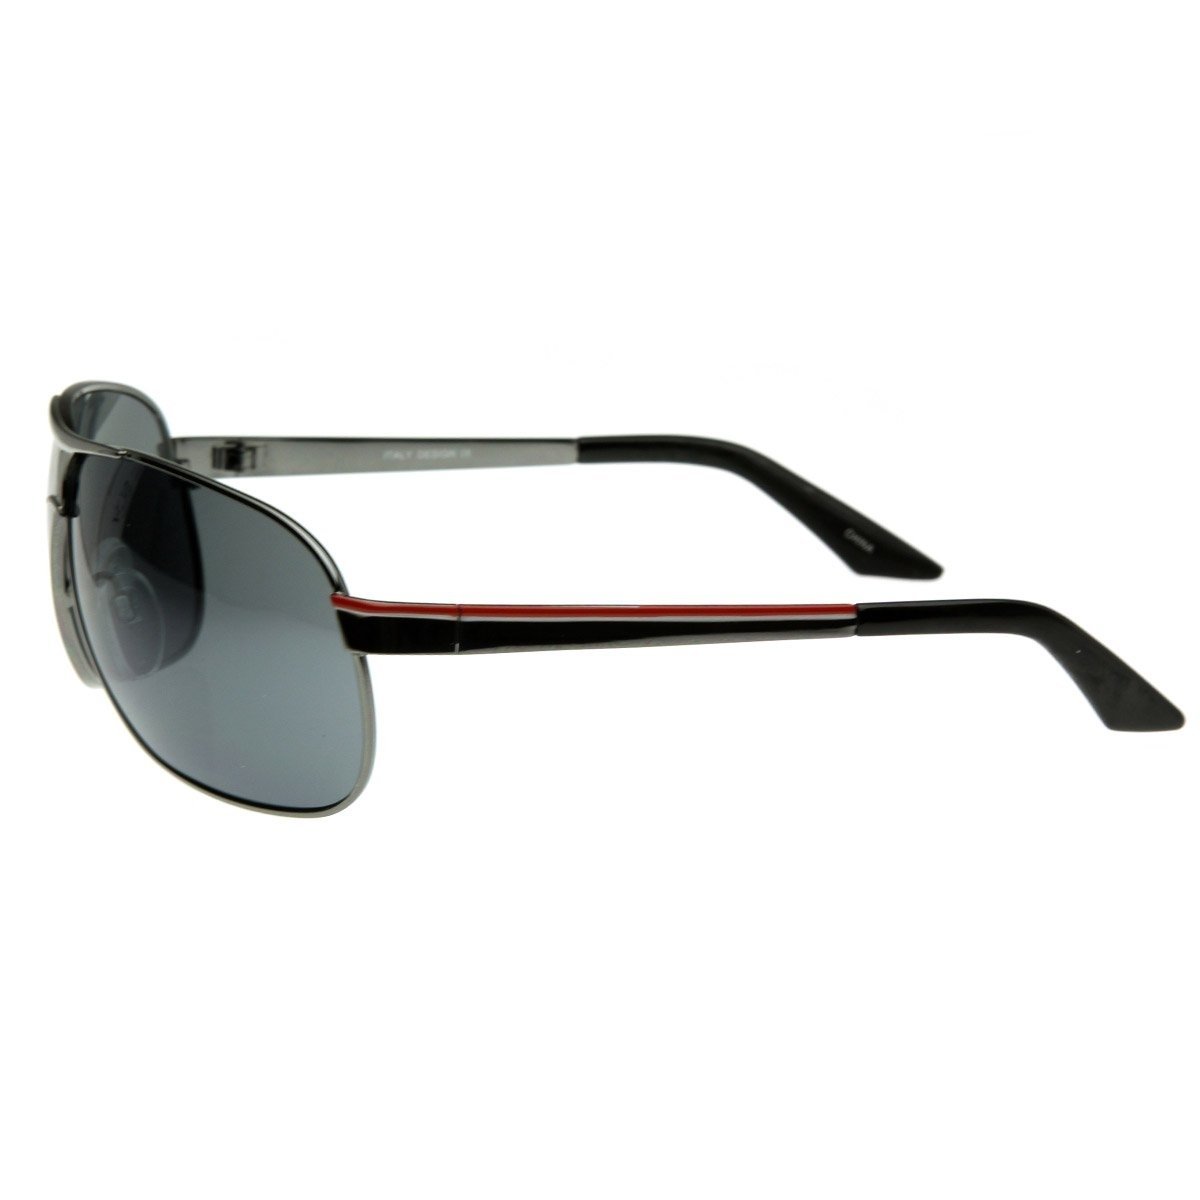 Square Aviator Large Metal Aviator Sunglasses - Gunmetal